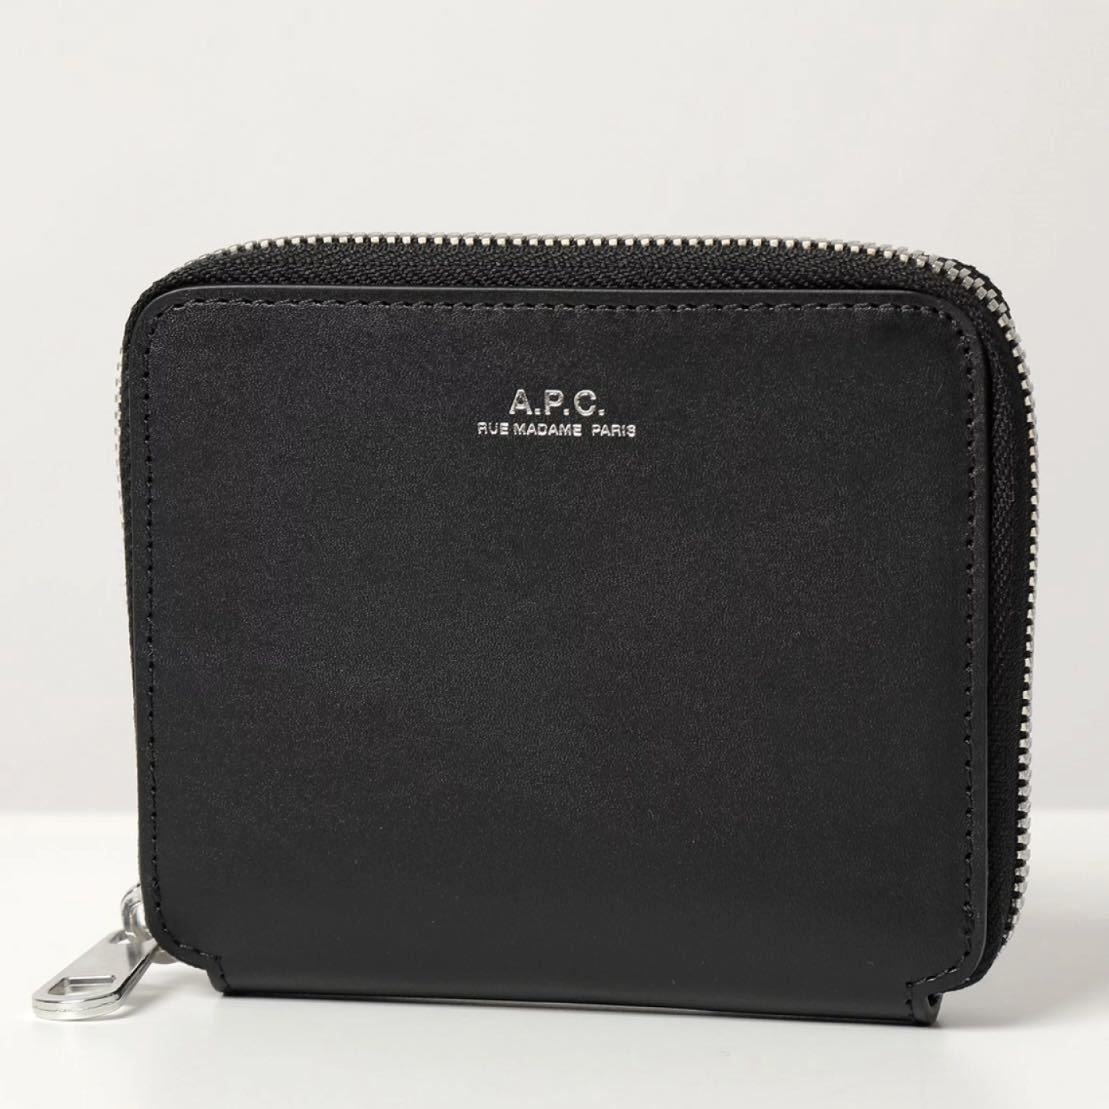 A.P.C. アーペーセー 二つ折り財布 compact malo レザー スモール財布